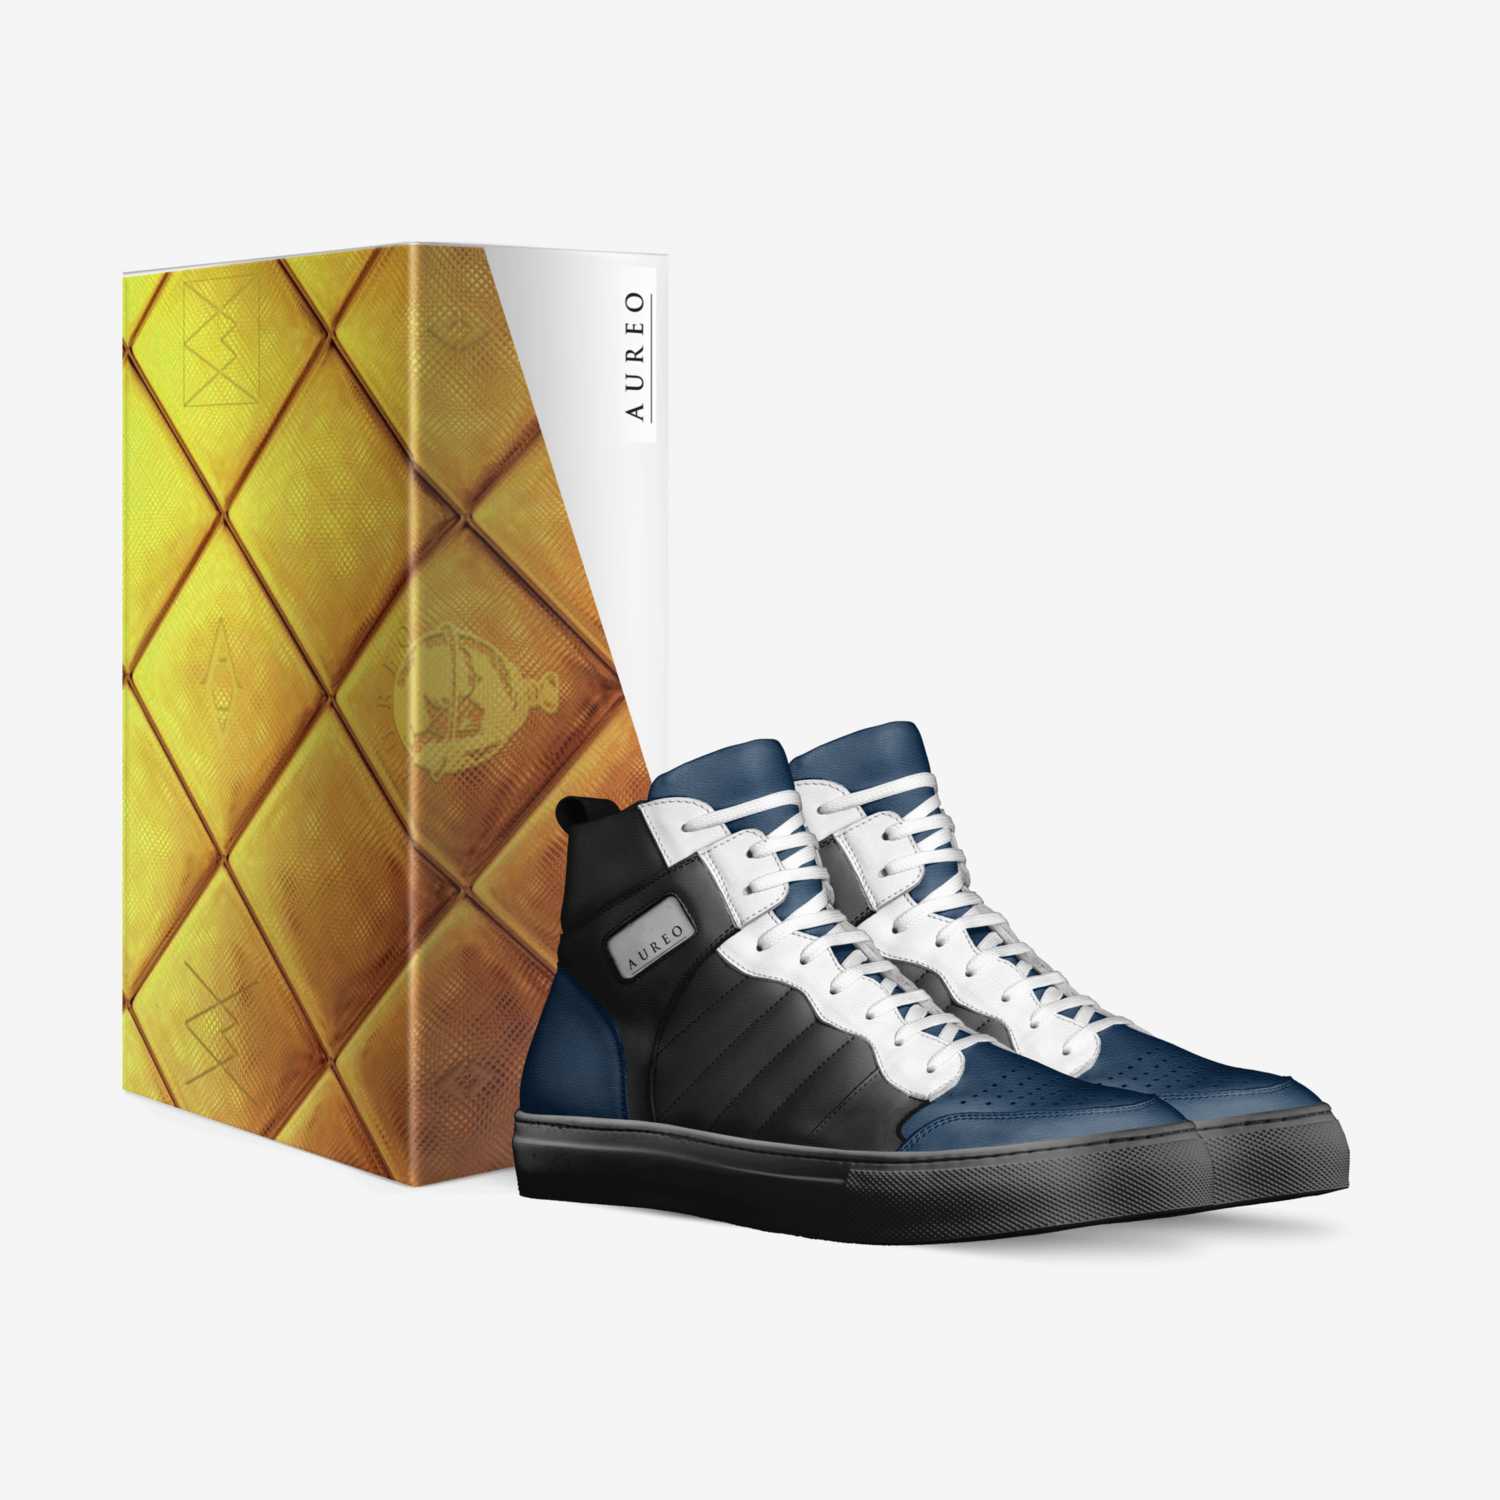 AUREO custom made in Italy shoes by Aureo Worldwide | Box view